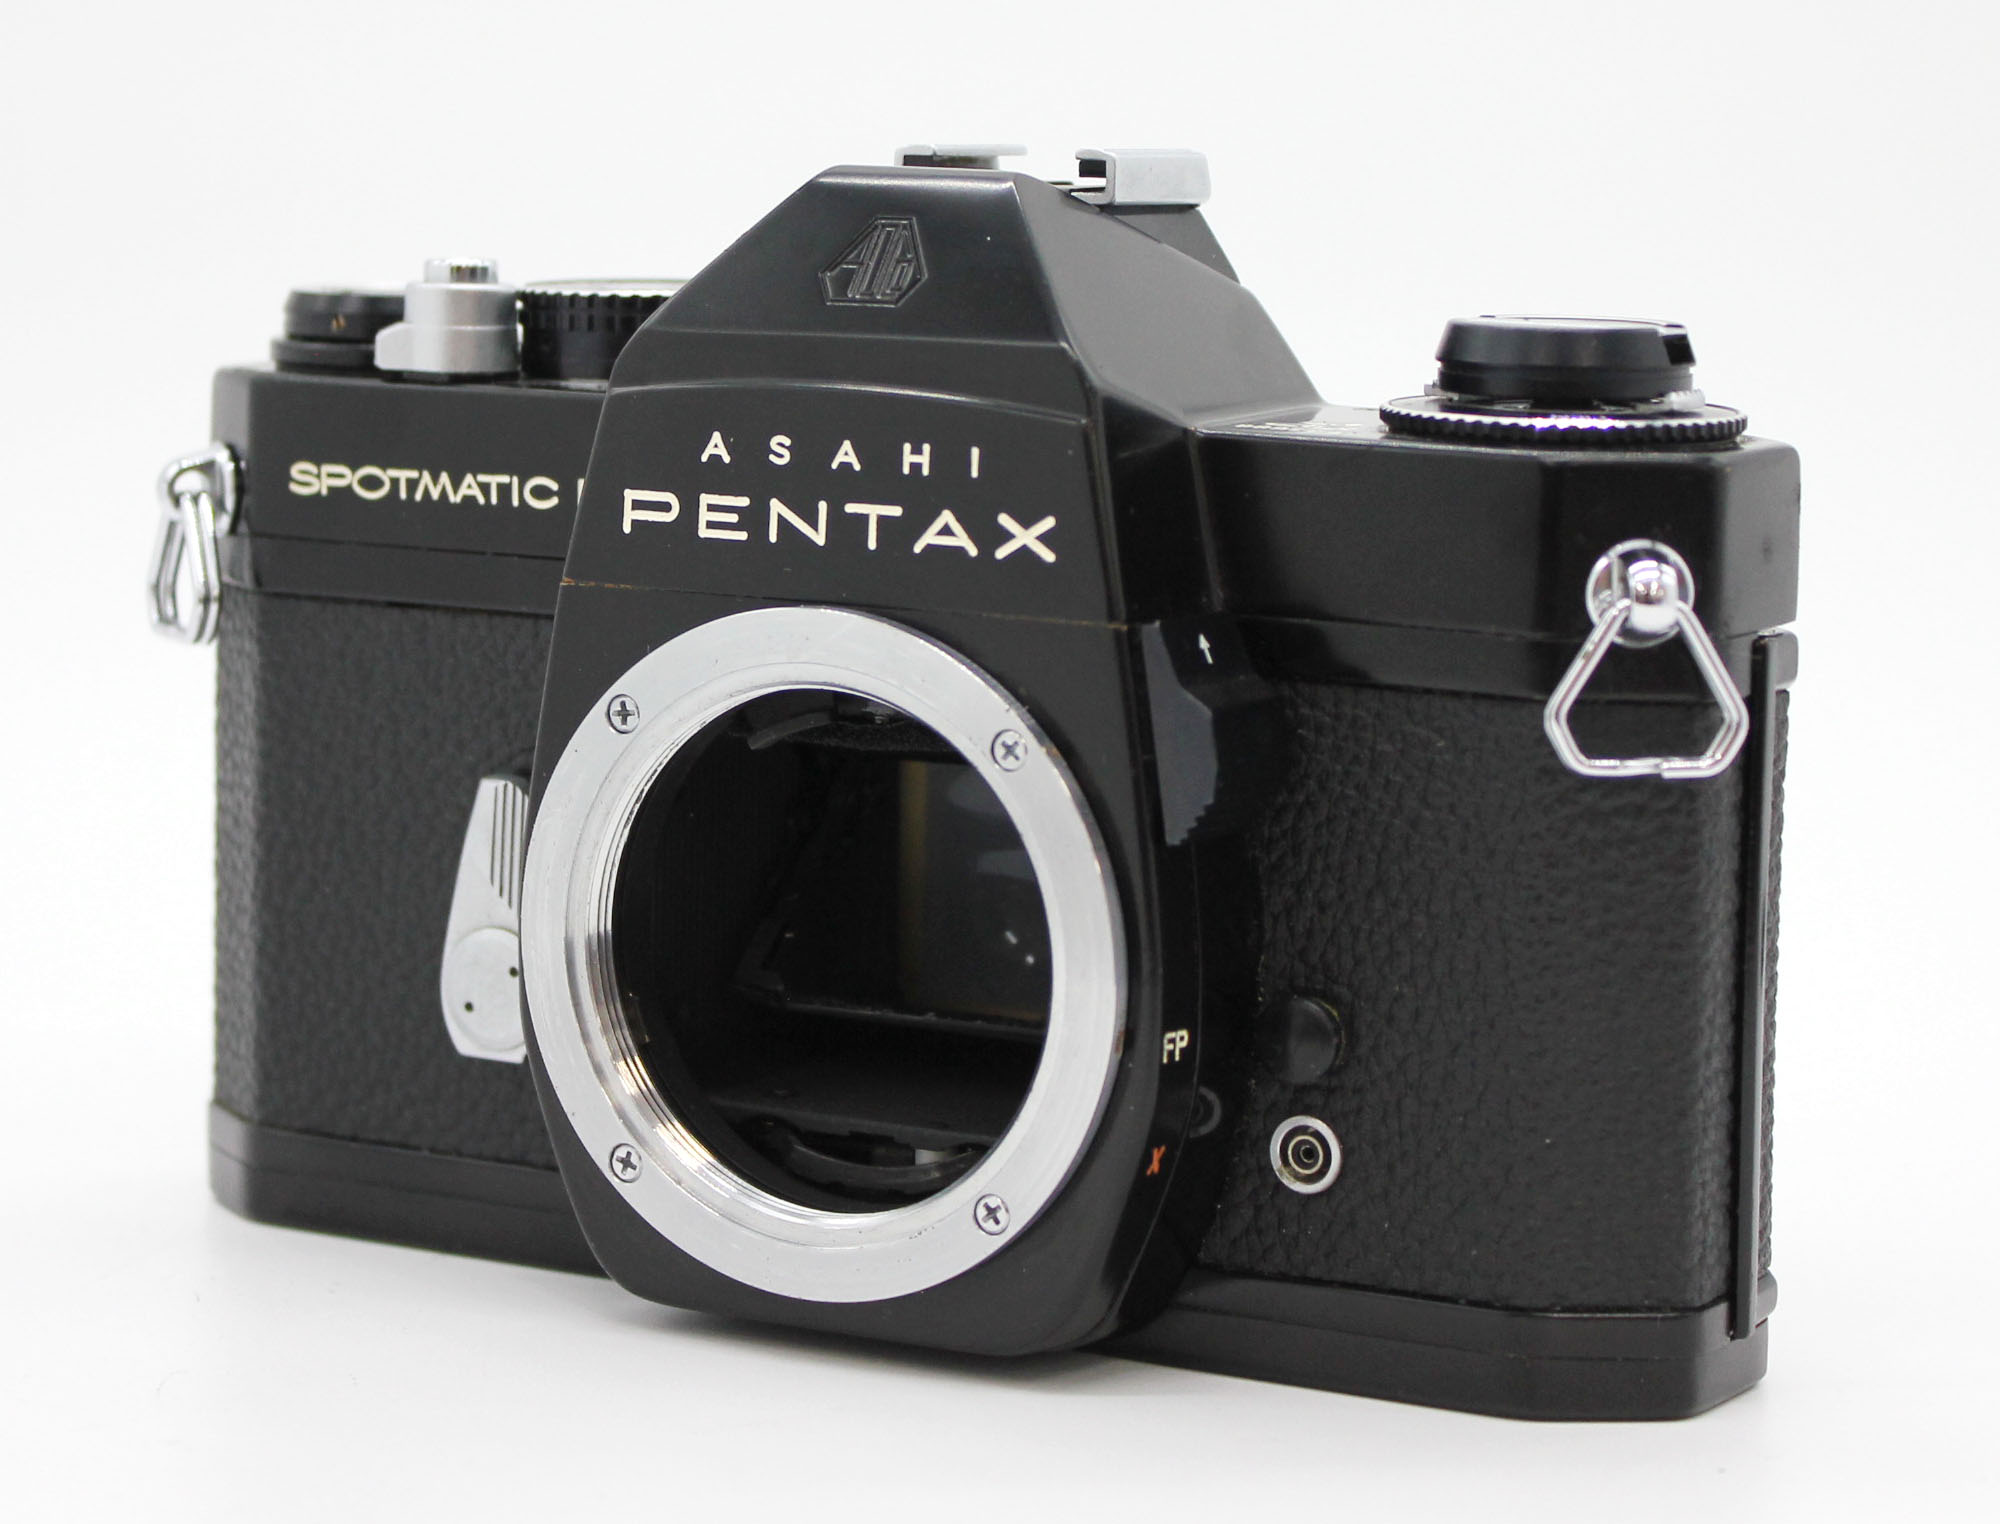 Asahi Pentax Spotmatic F SPF 35mm SLR Camera Black w/ SMC Super-Multi-Coated Takumar 55mm F/1.8 Lens from Japan Photo 1